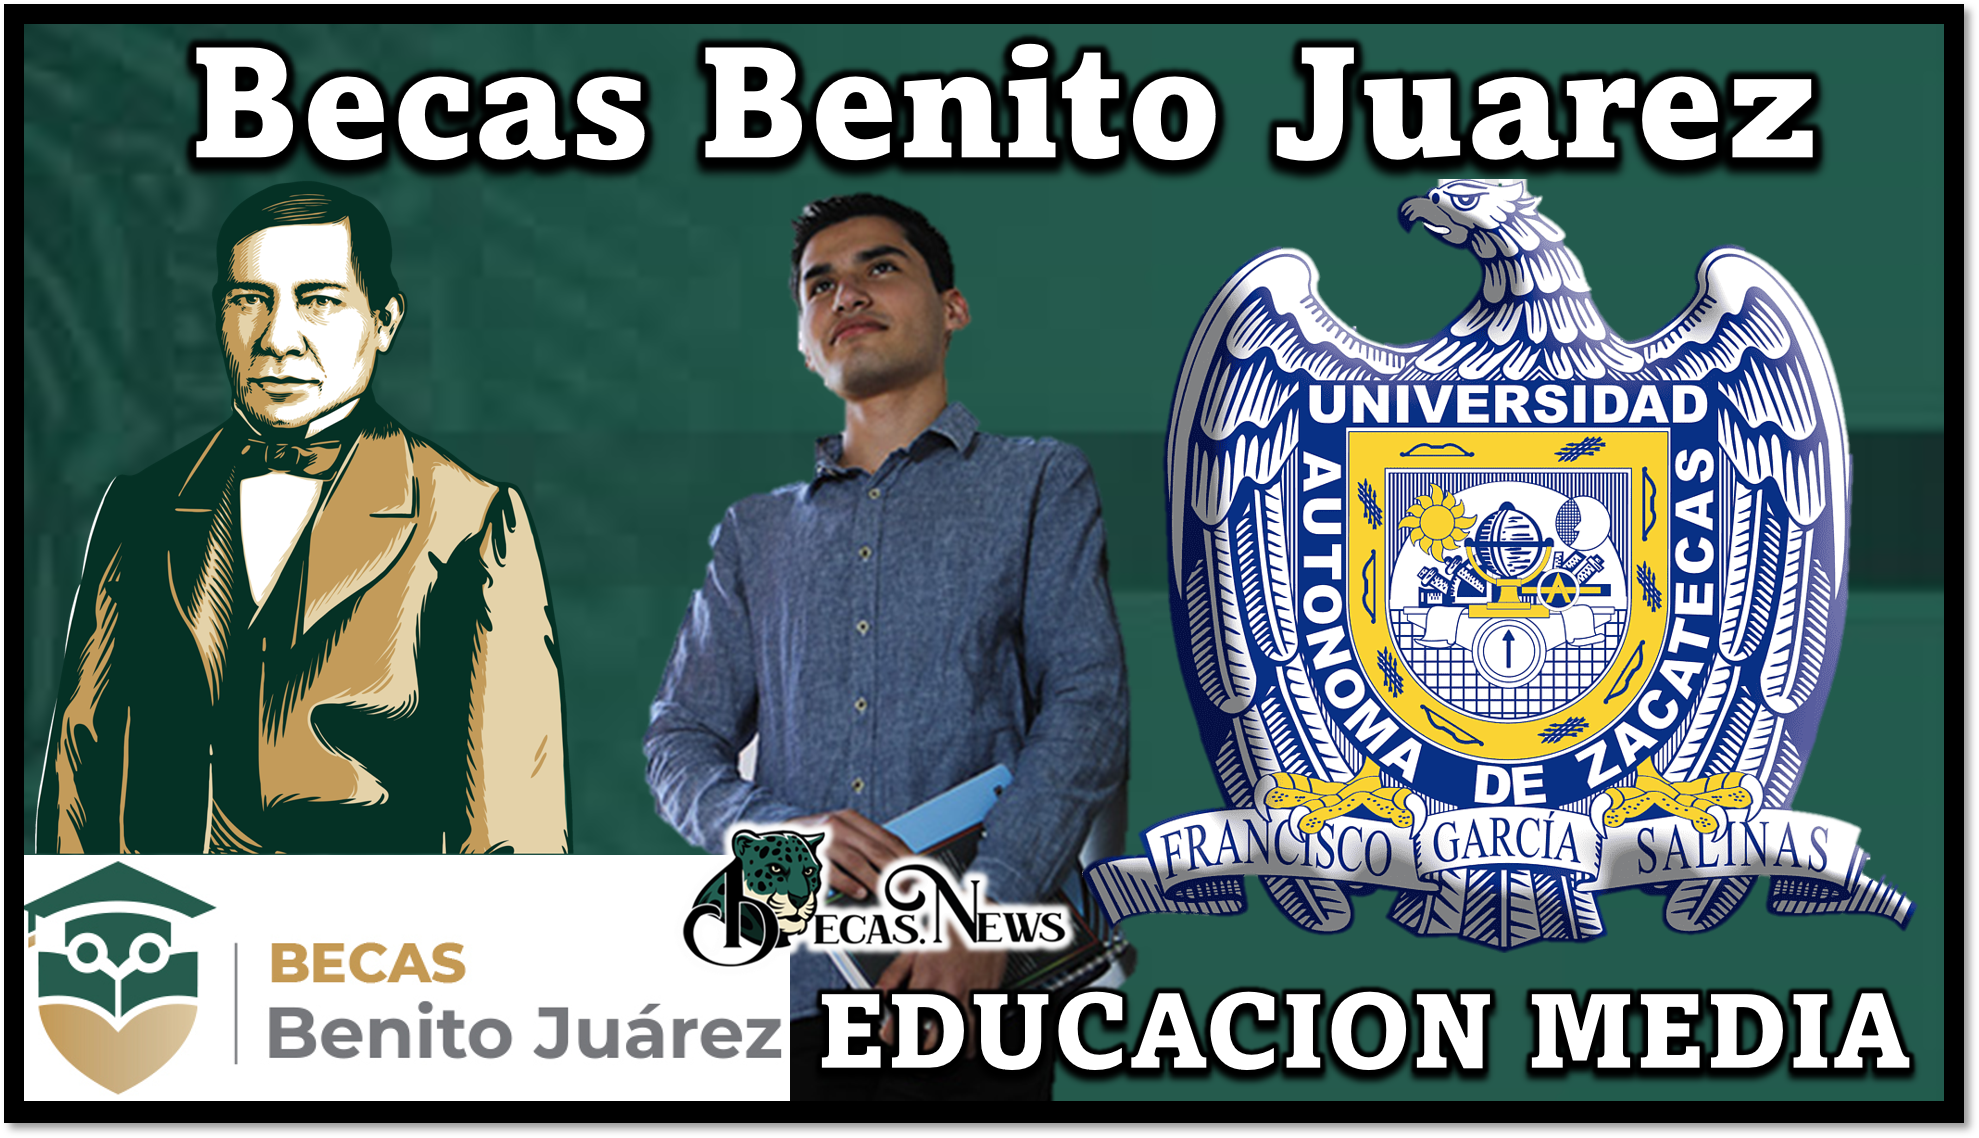 Entregas de Becas del programa Benito Juarez para alumnos de Preparatoria UAZ